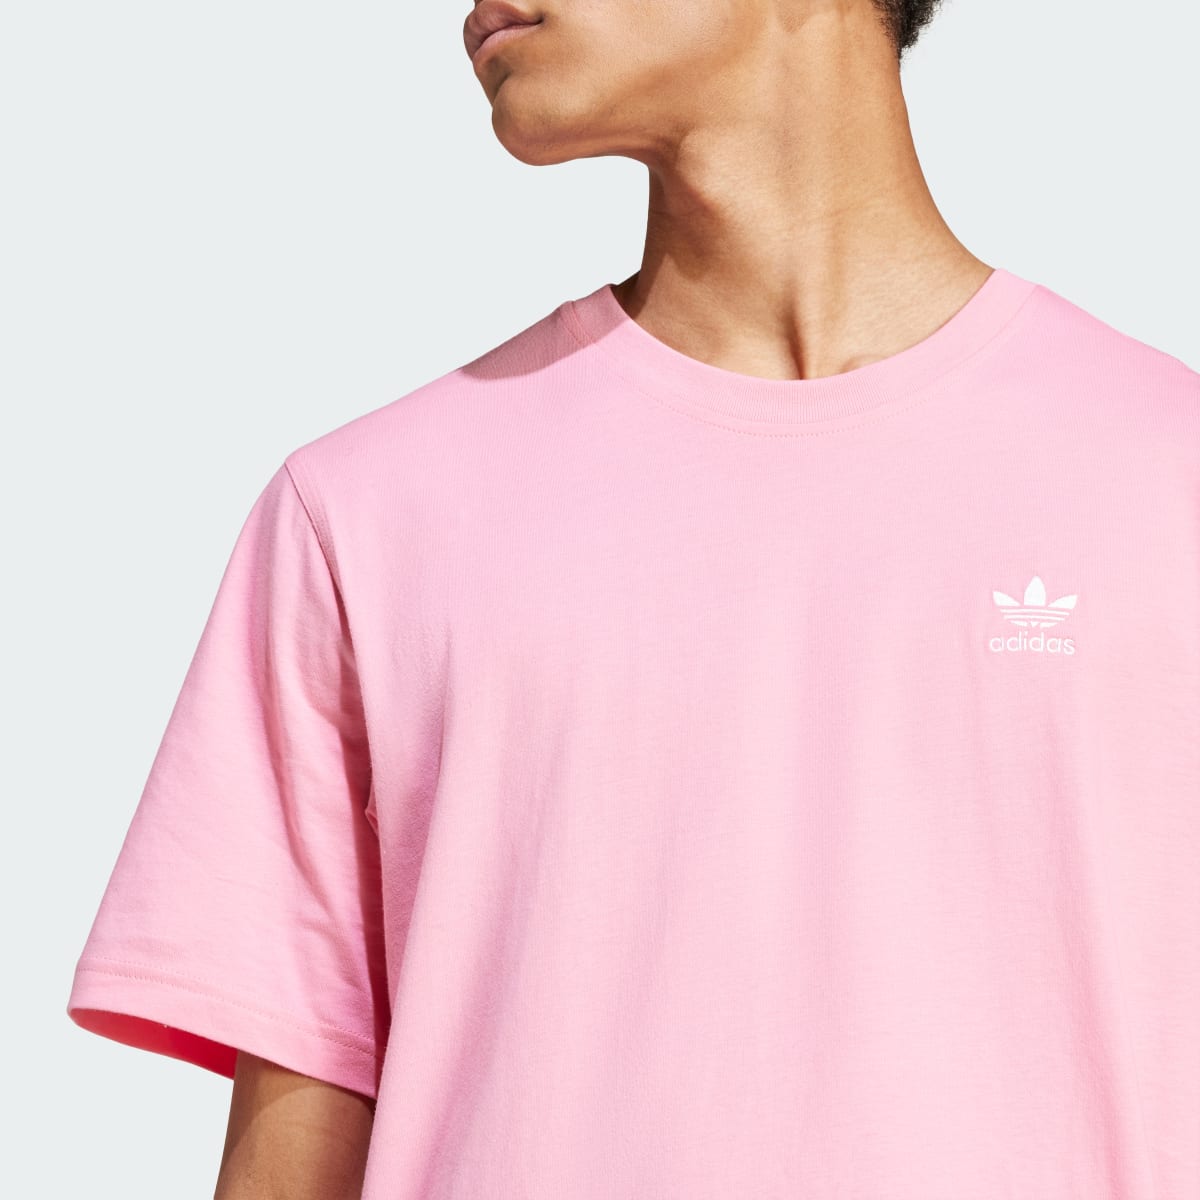 Adidas Pink T-Shirt. 5